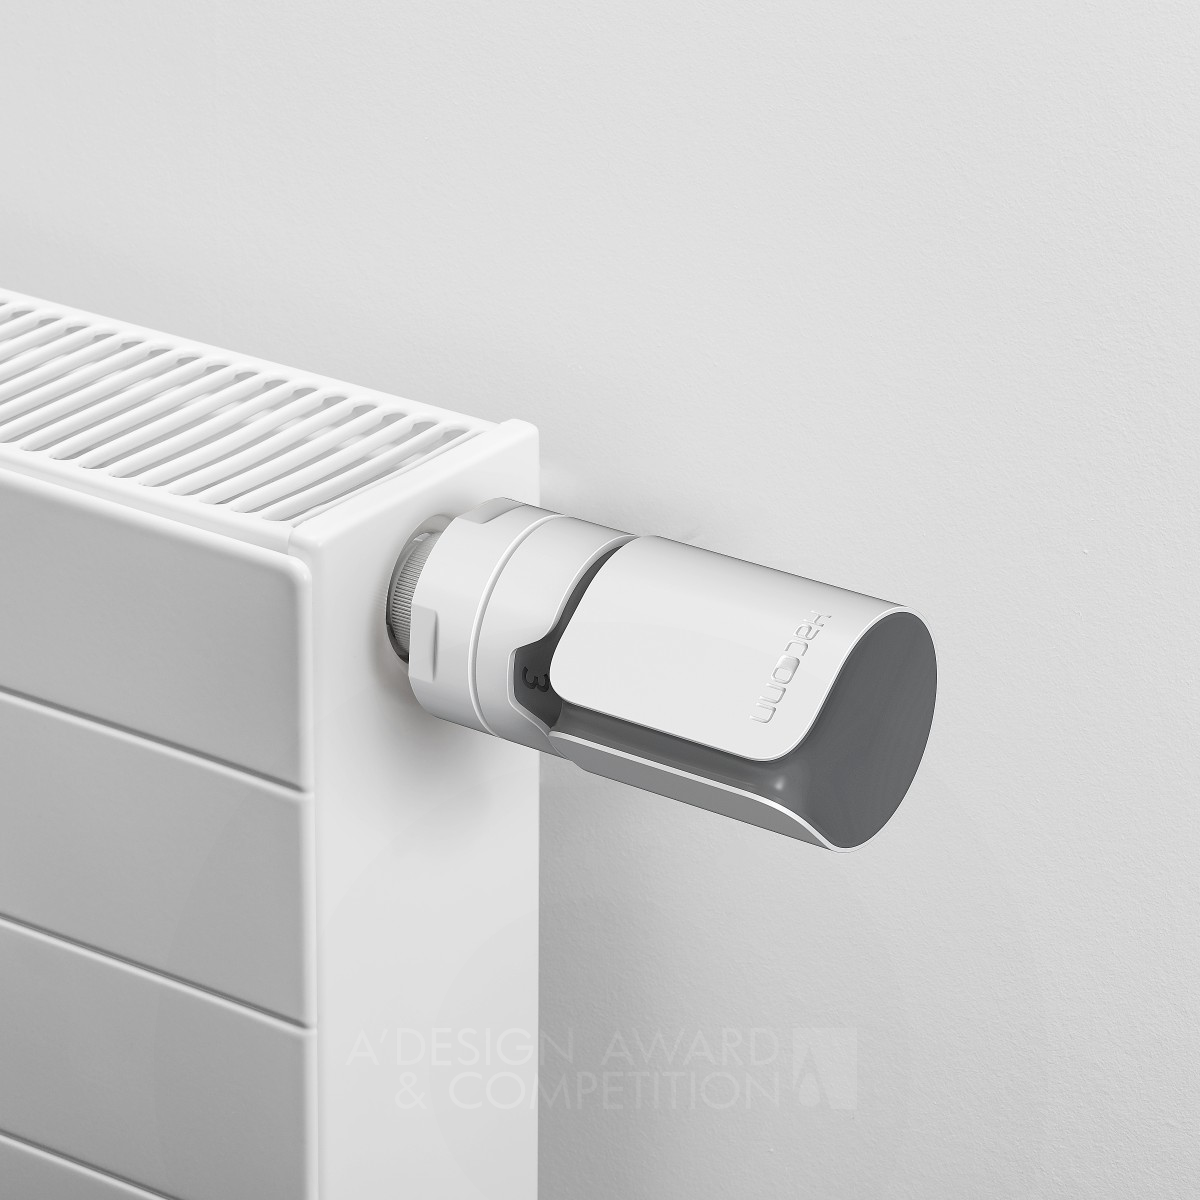 Haconn Premium Radiator Thermostat Automatically Regulates Room Temperature by david dos santos